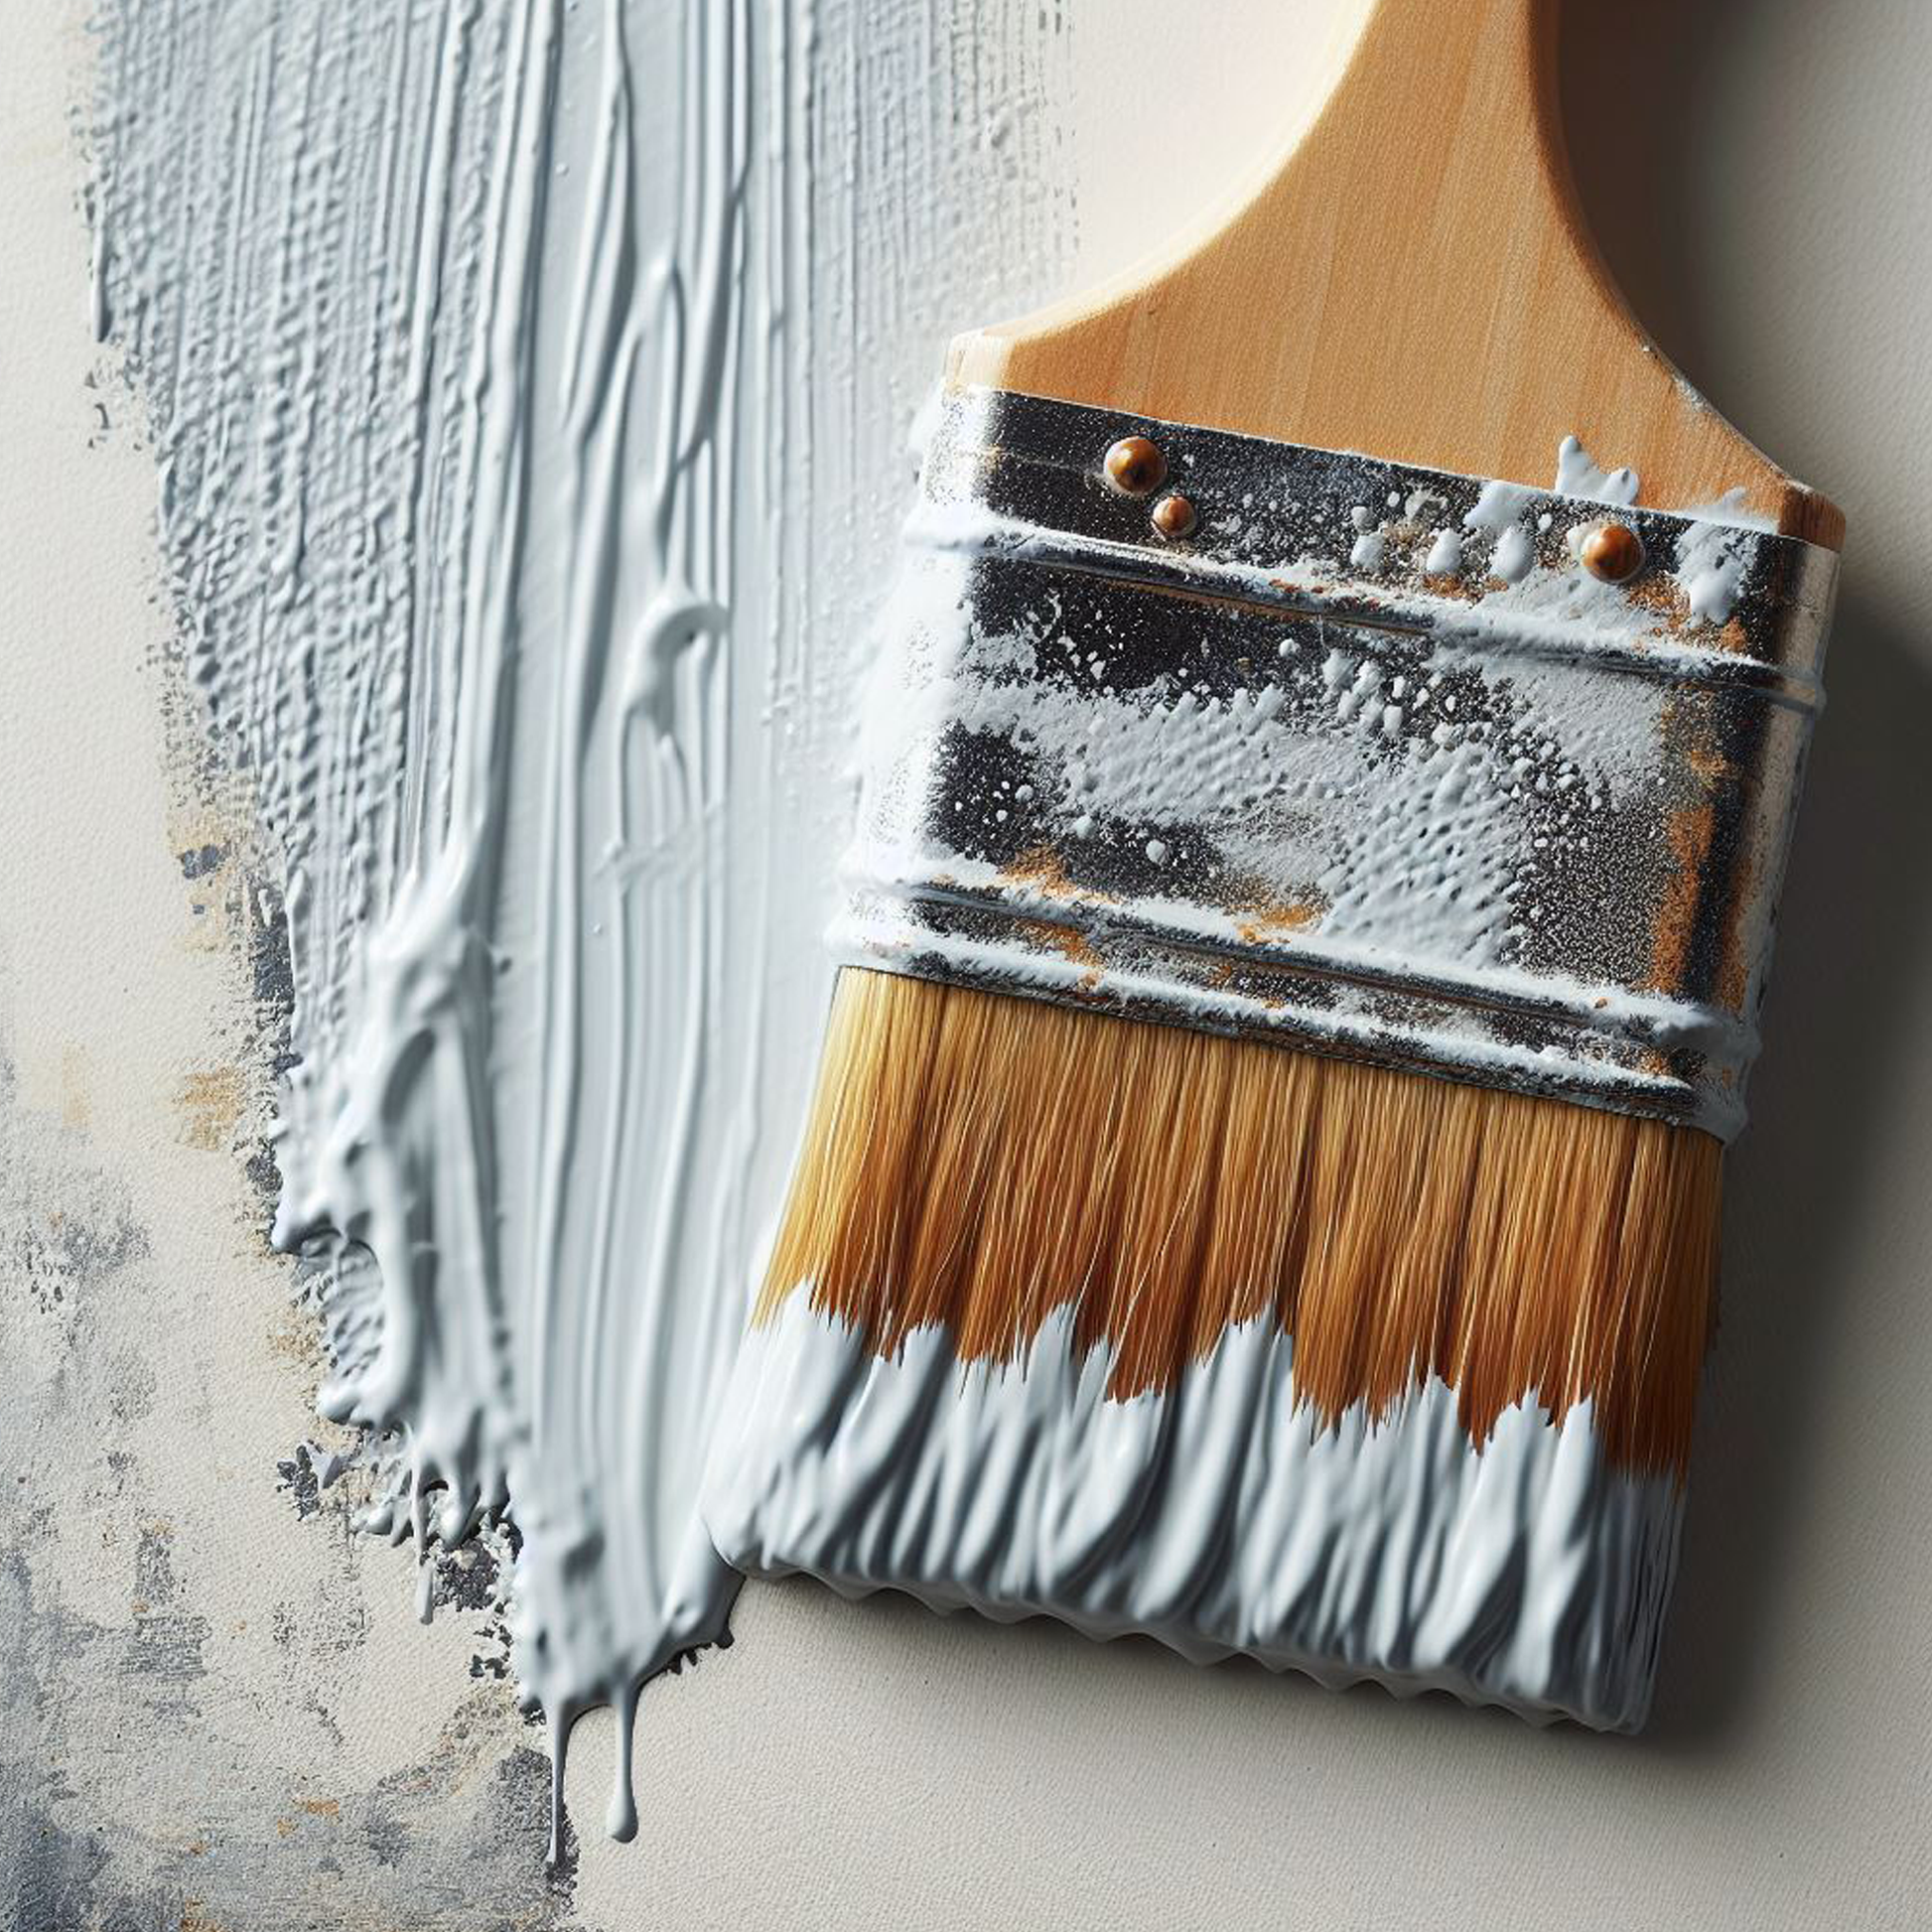 cascade white paint brush